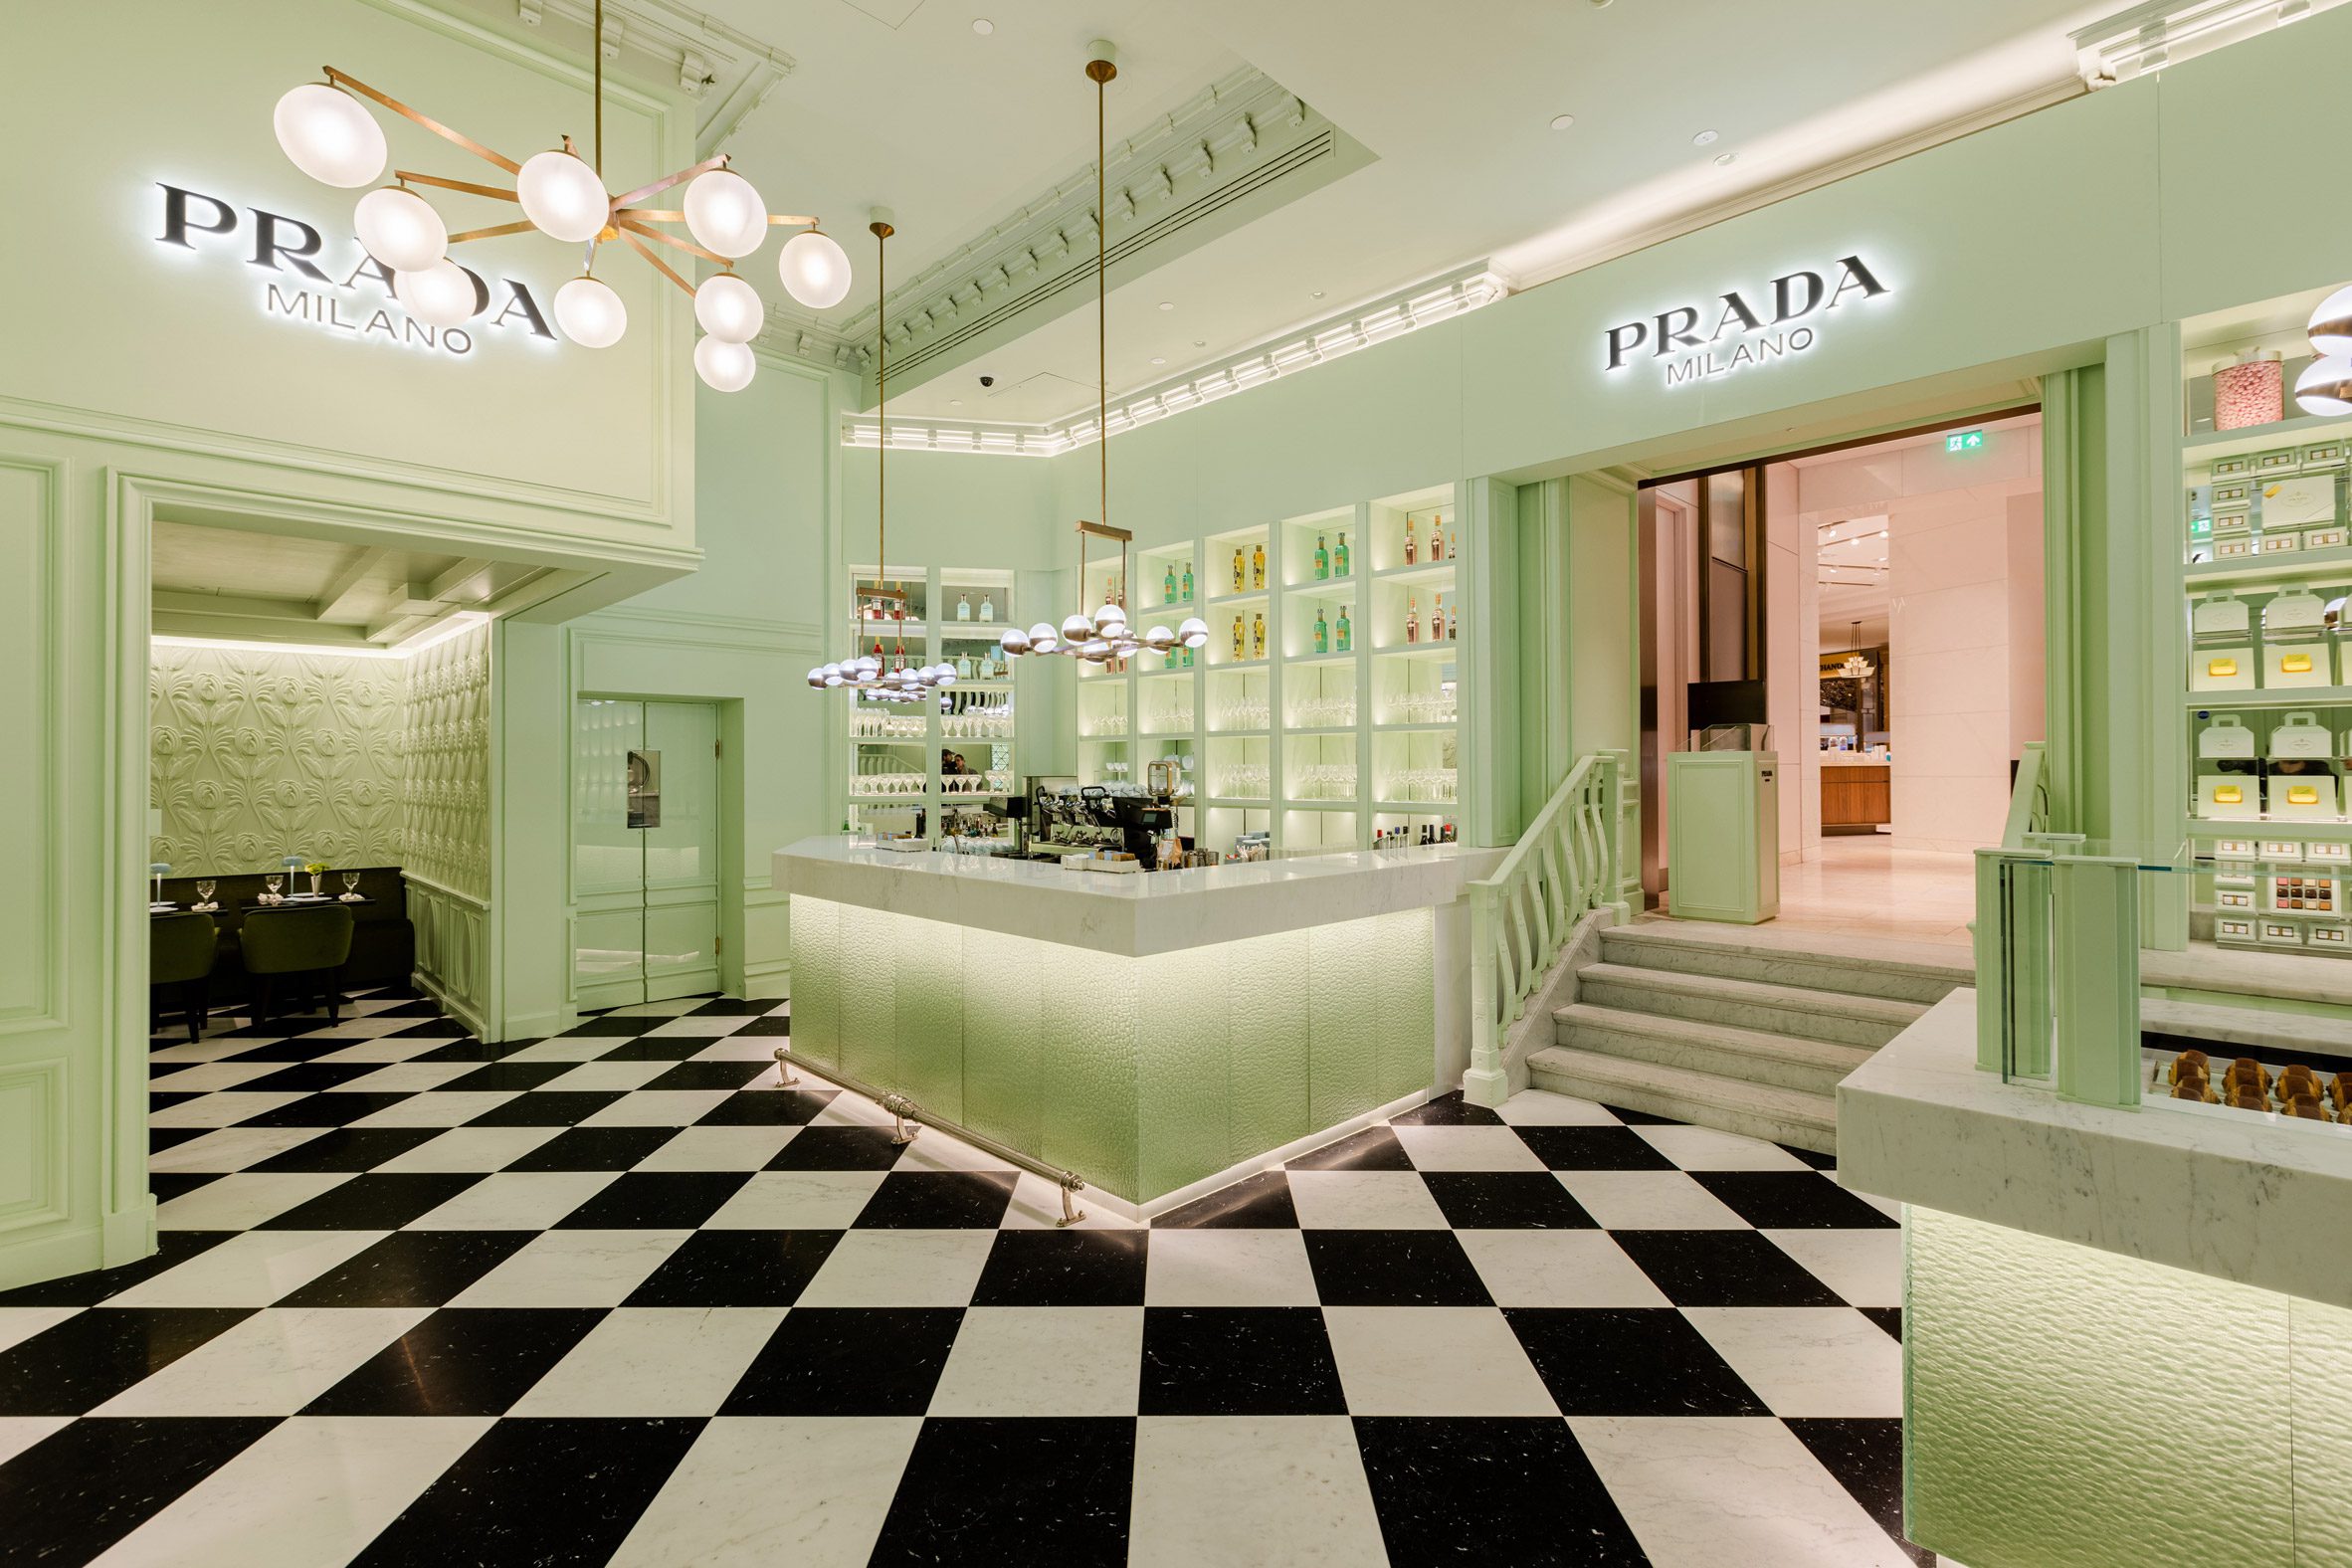 Prada opens Milaneseinformed patisserie cafe at Harrods Designlab